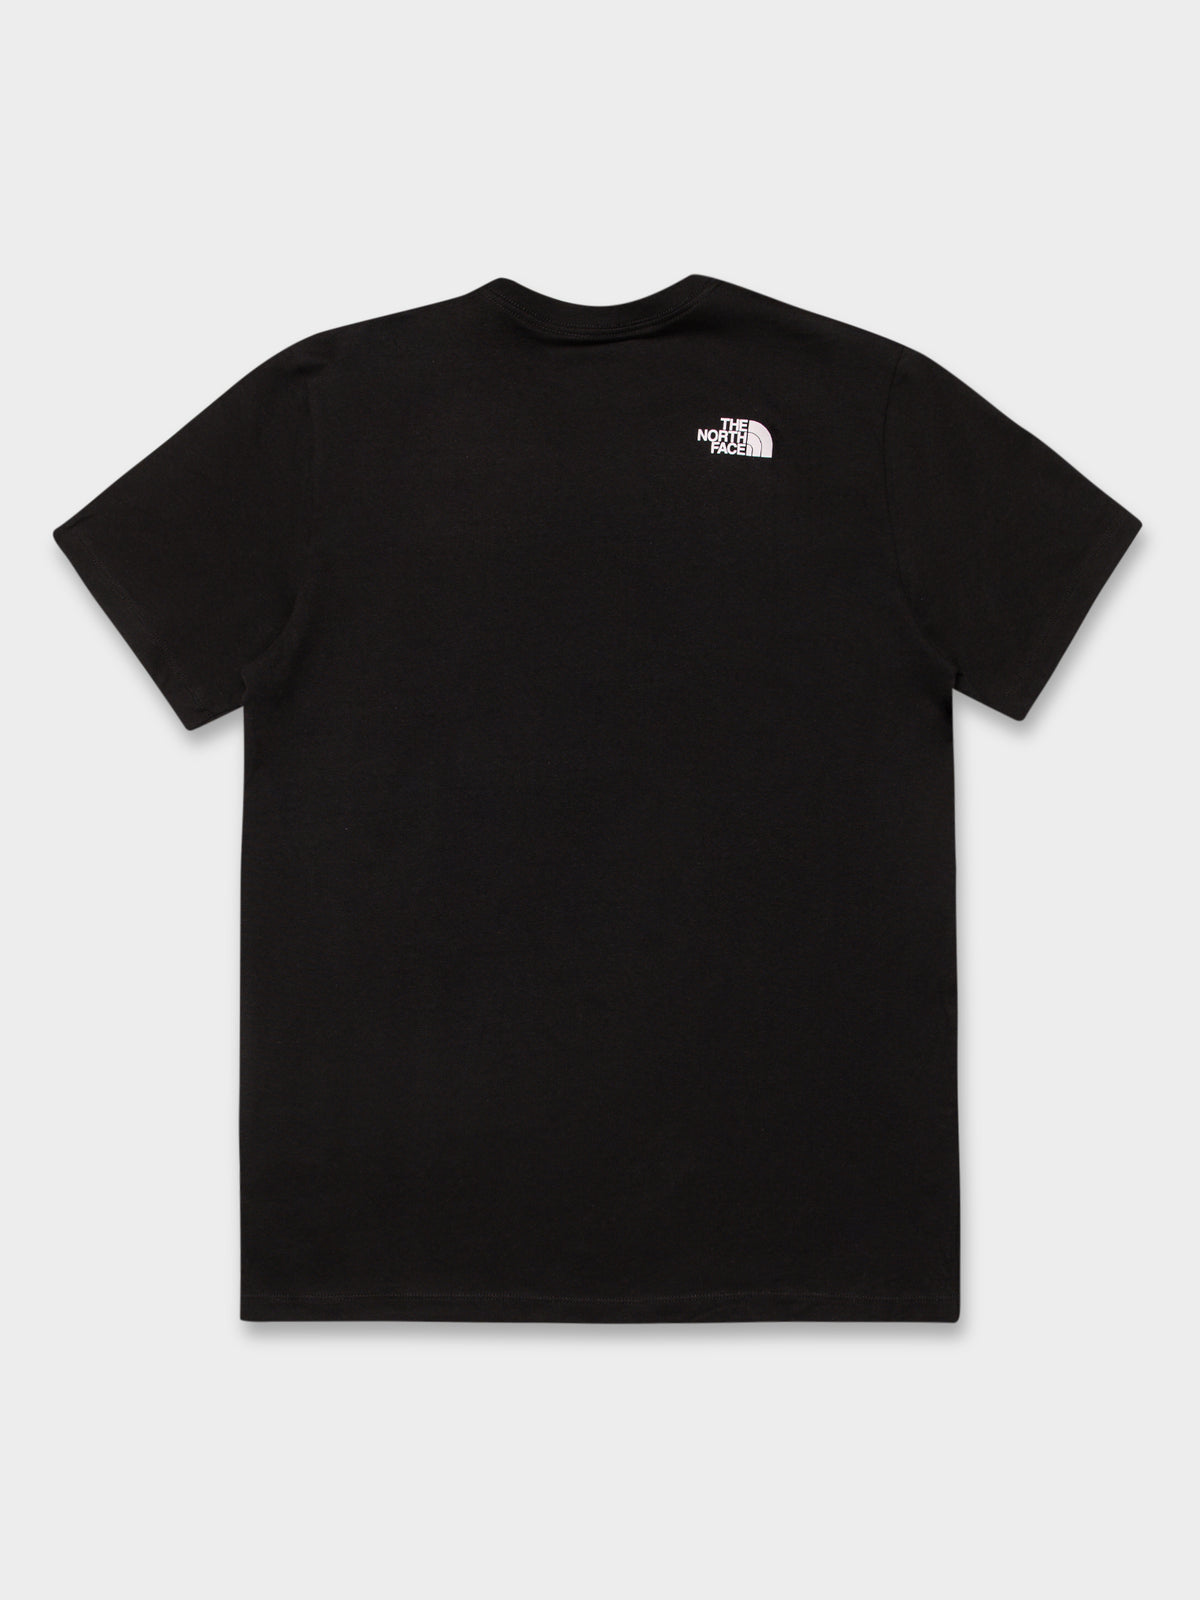 Fine Short Sleeve T-Shirt in Black